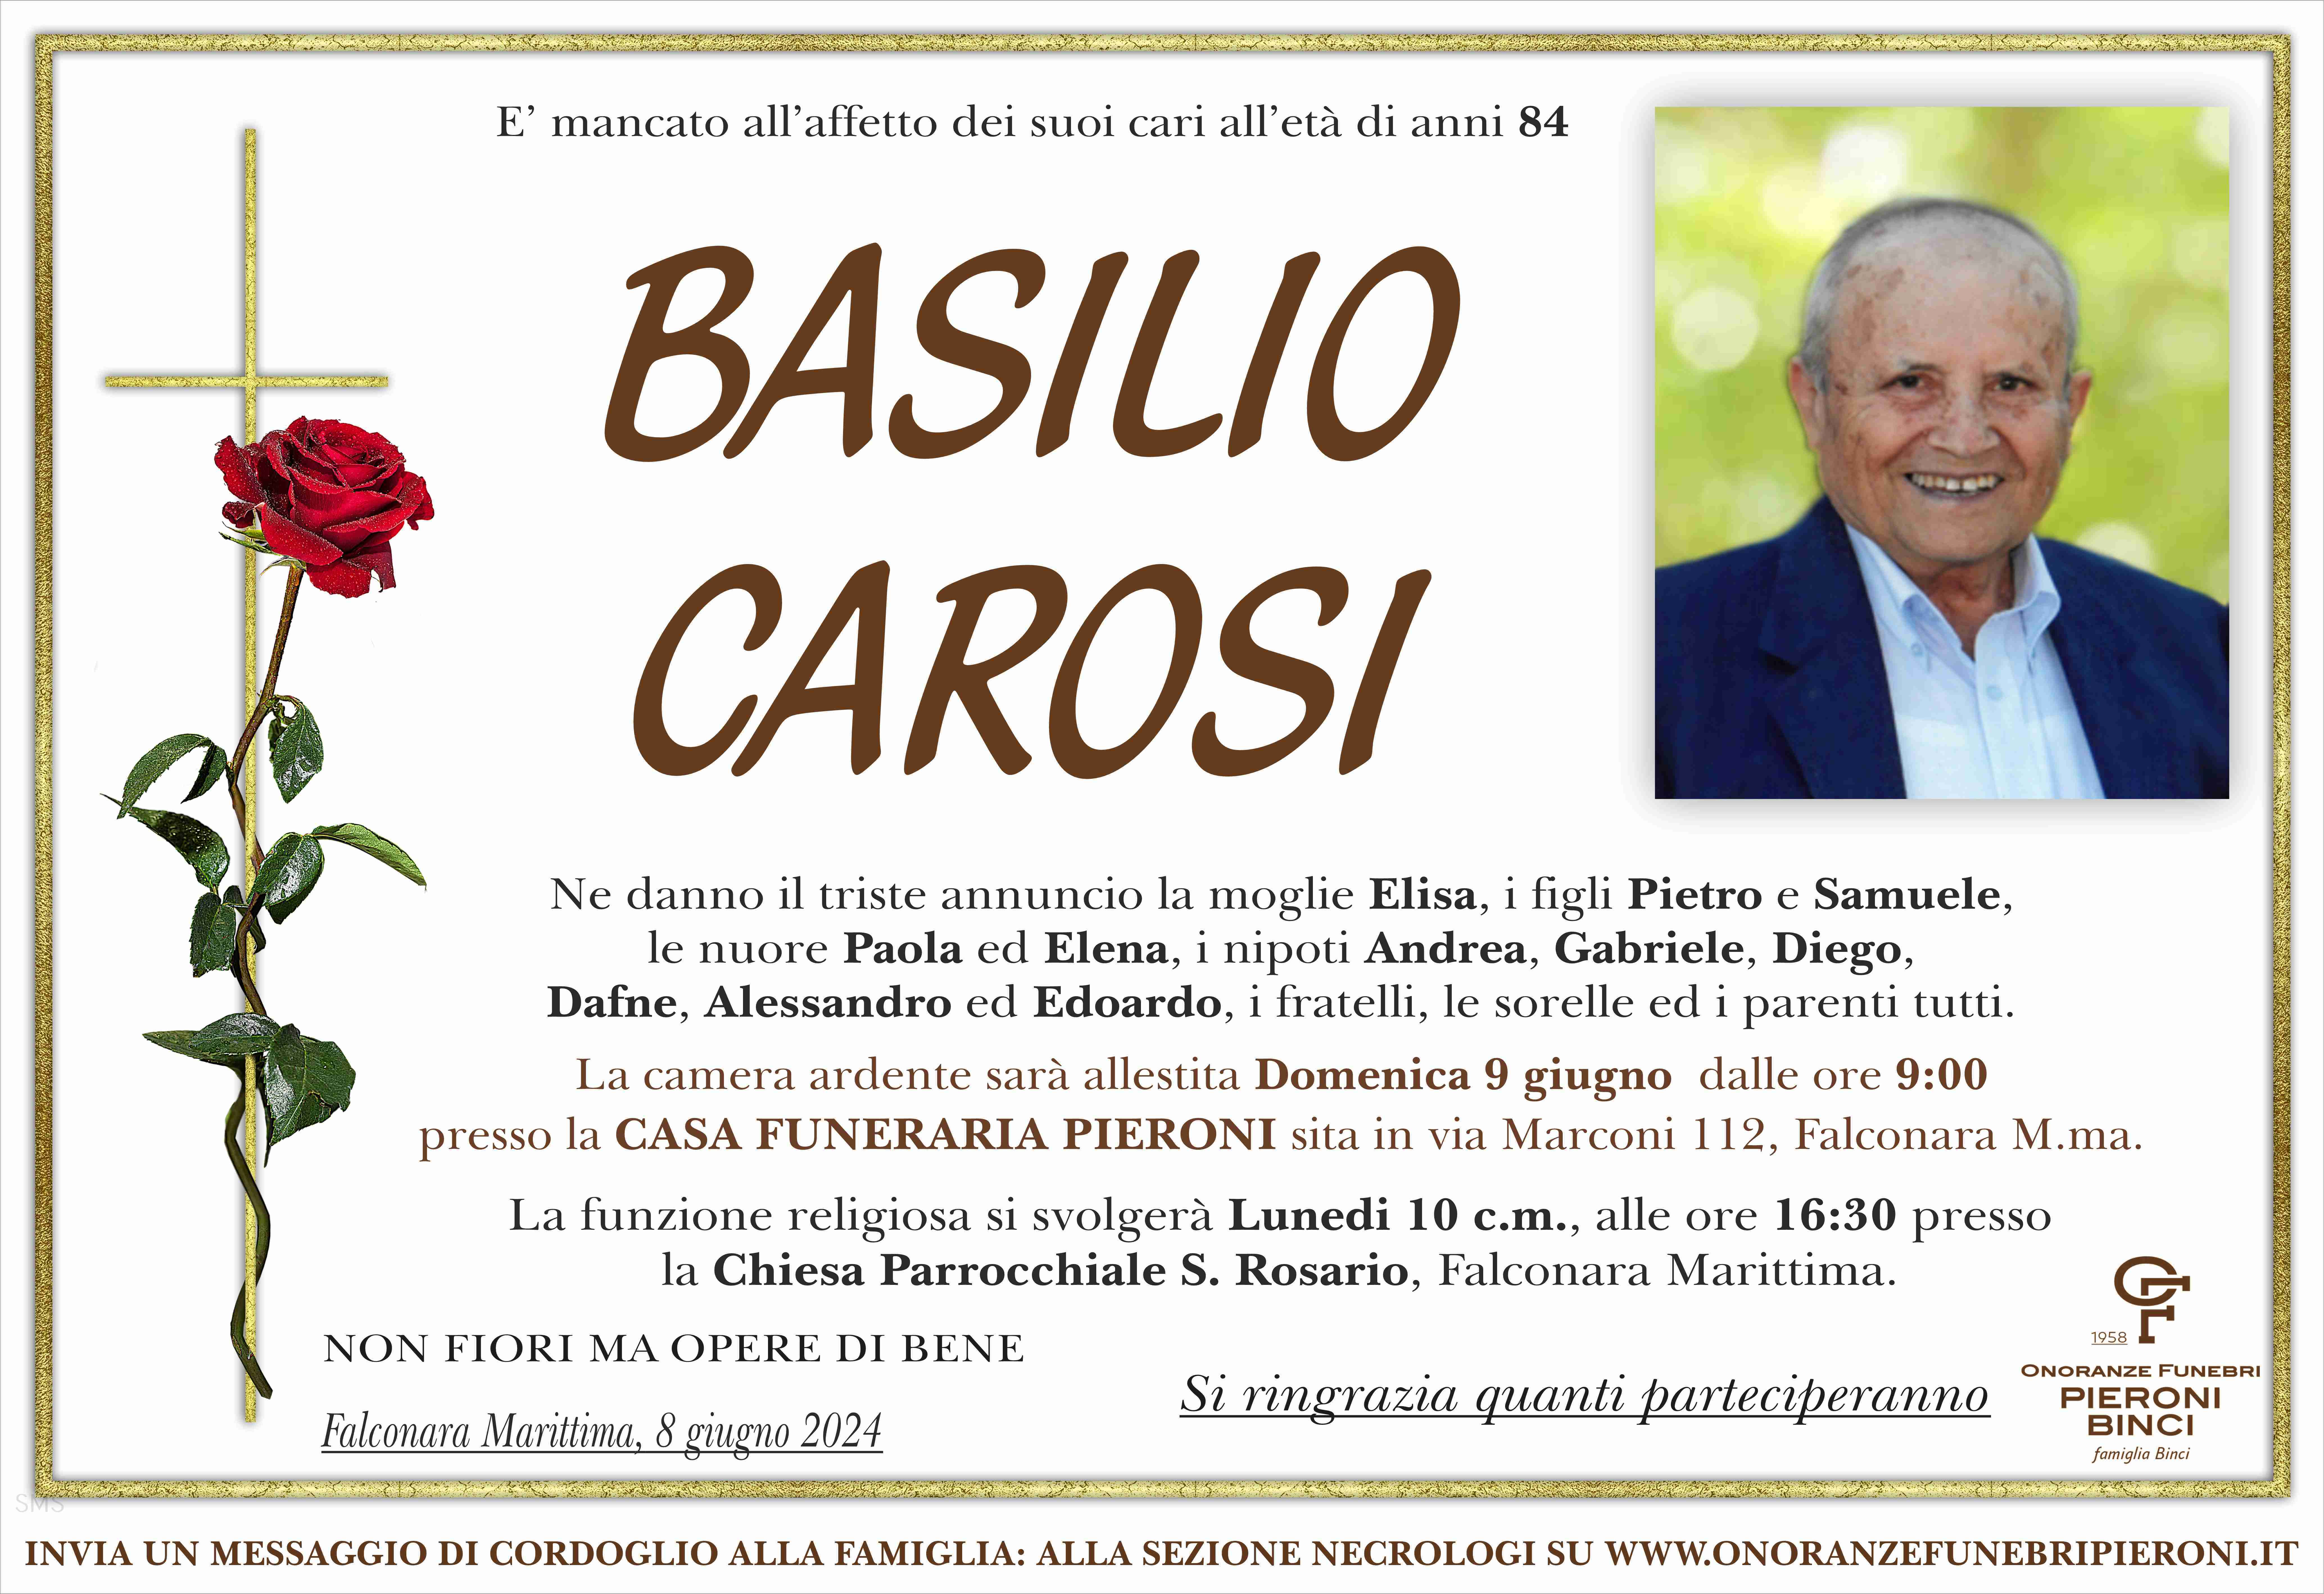 Basilio Carosi